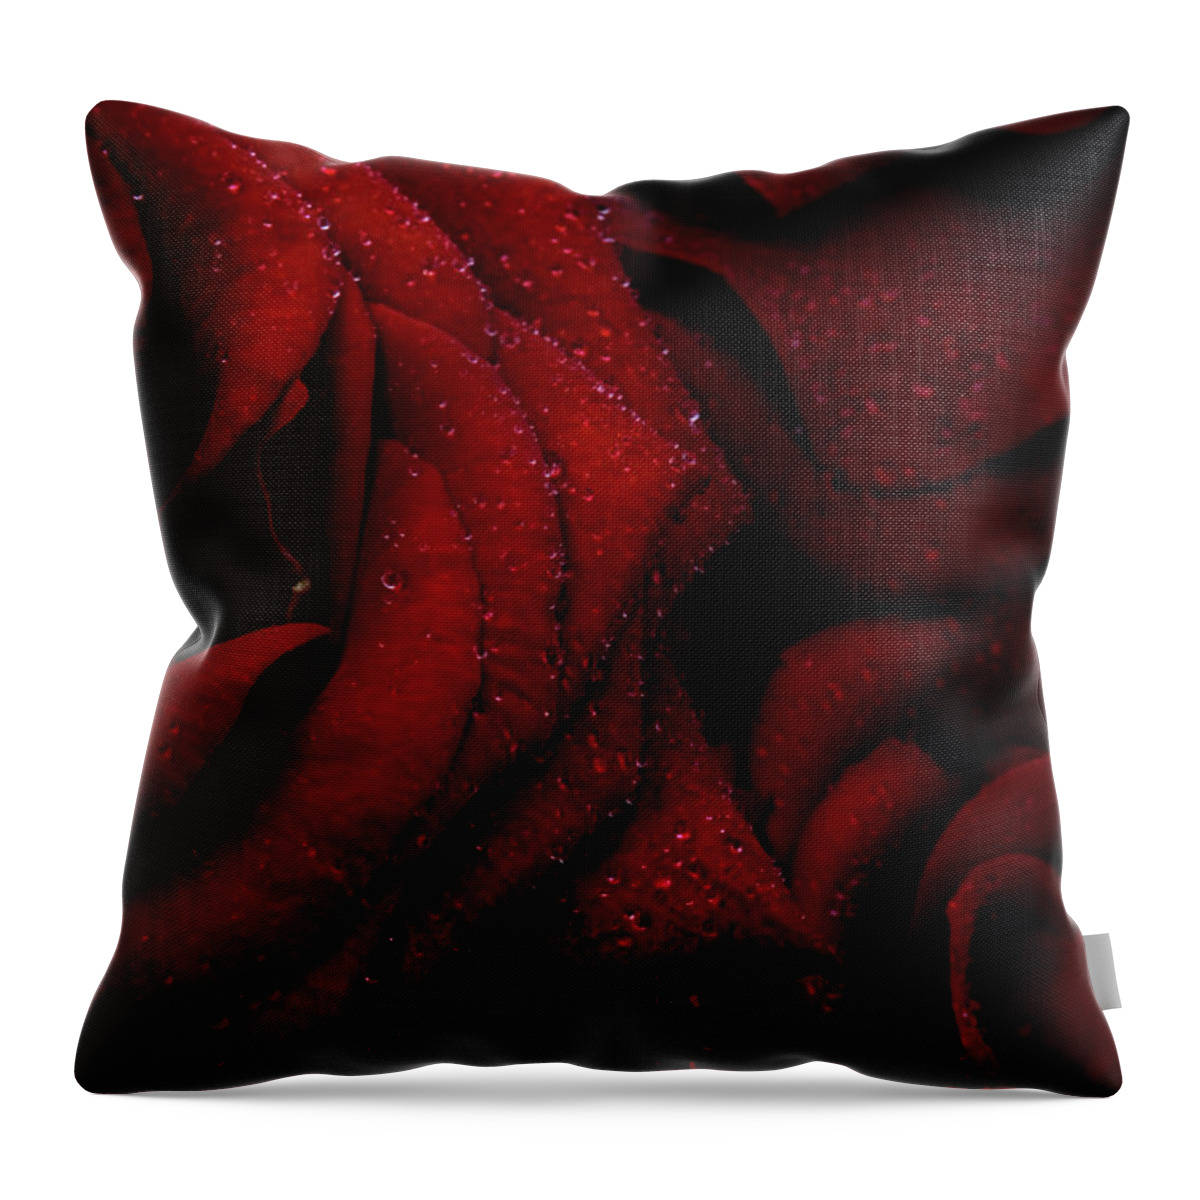 Rose Throw Pillow featuring the photograph Red Velvet Tears by Ann Garrett